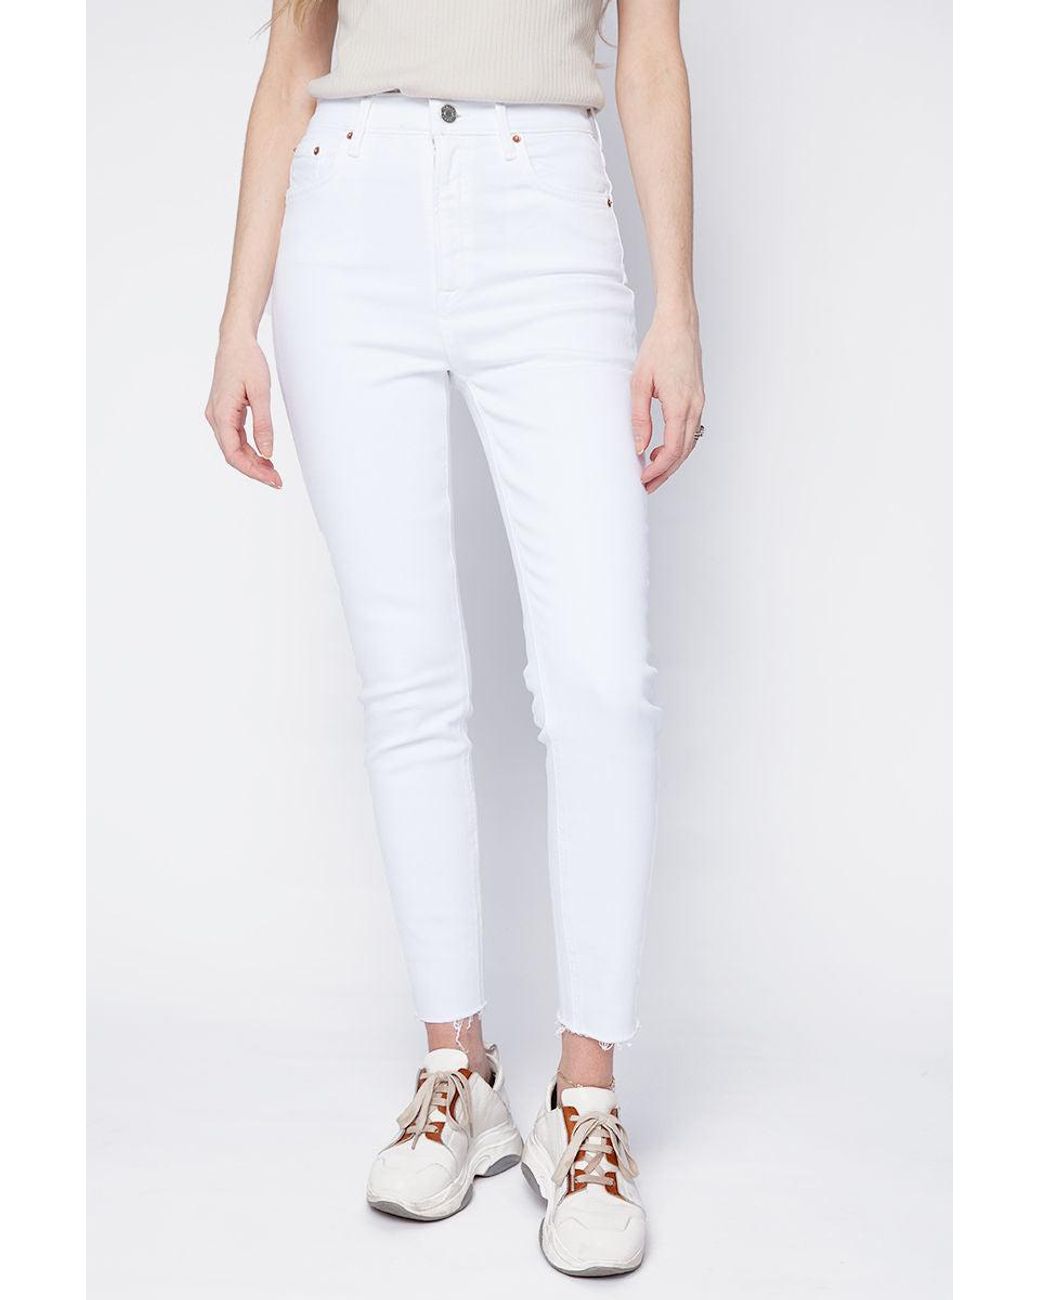 GRLFRND Kendall Jeans in White | Lyst